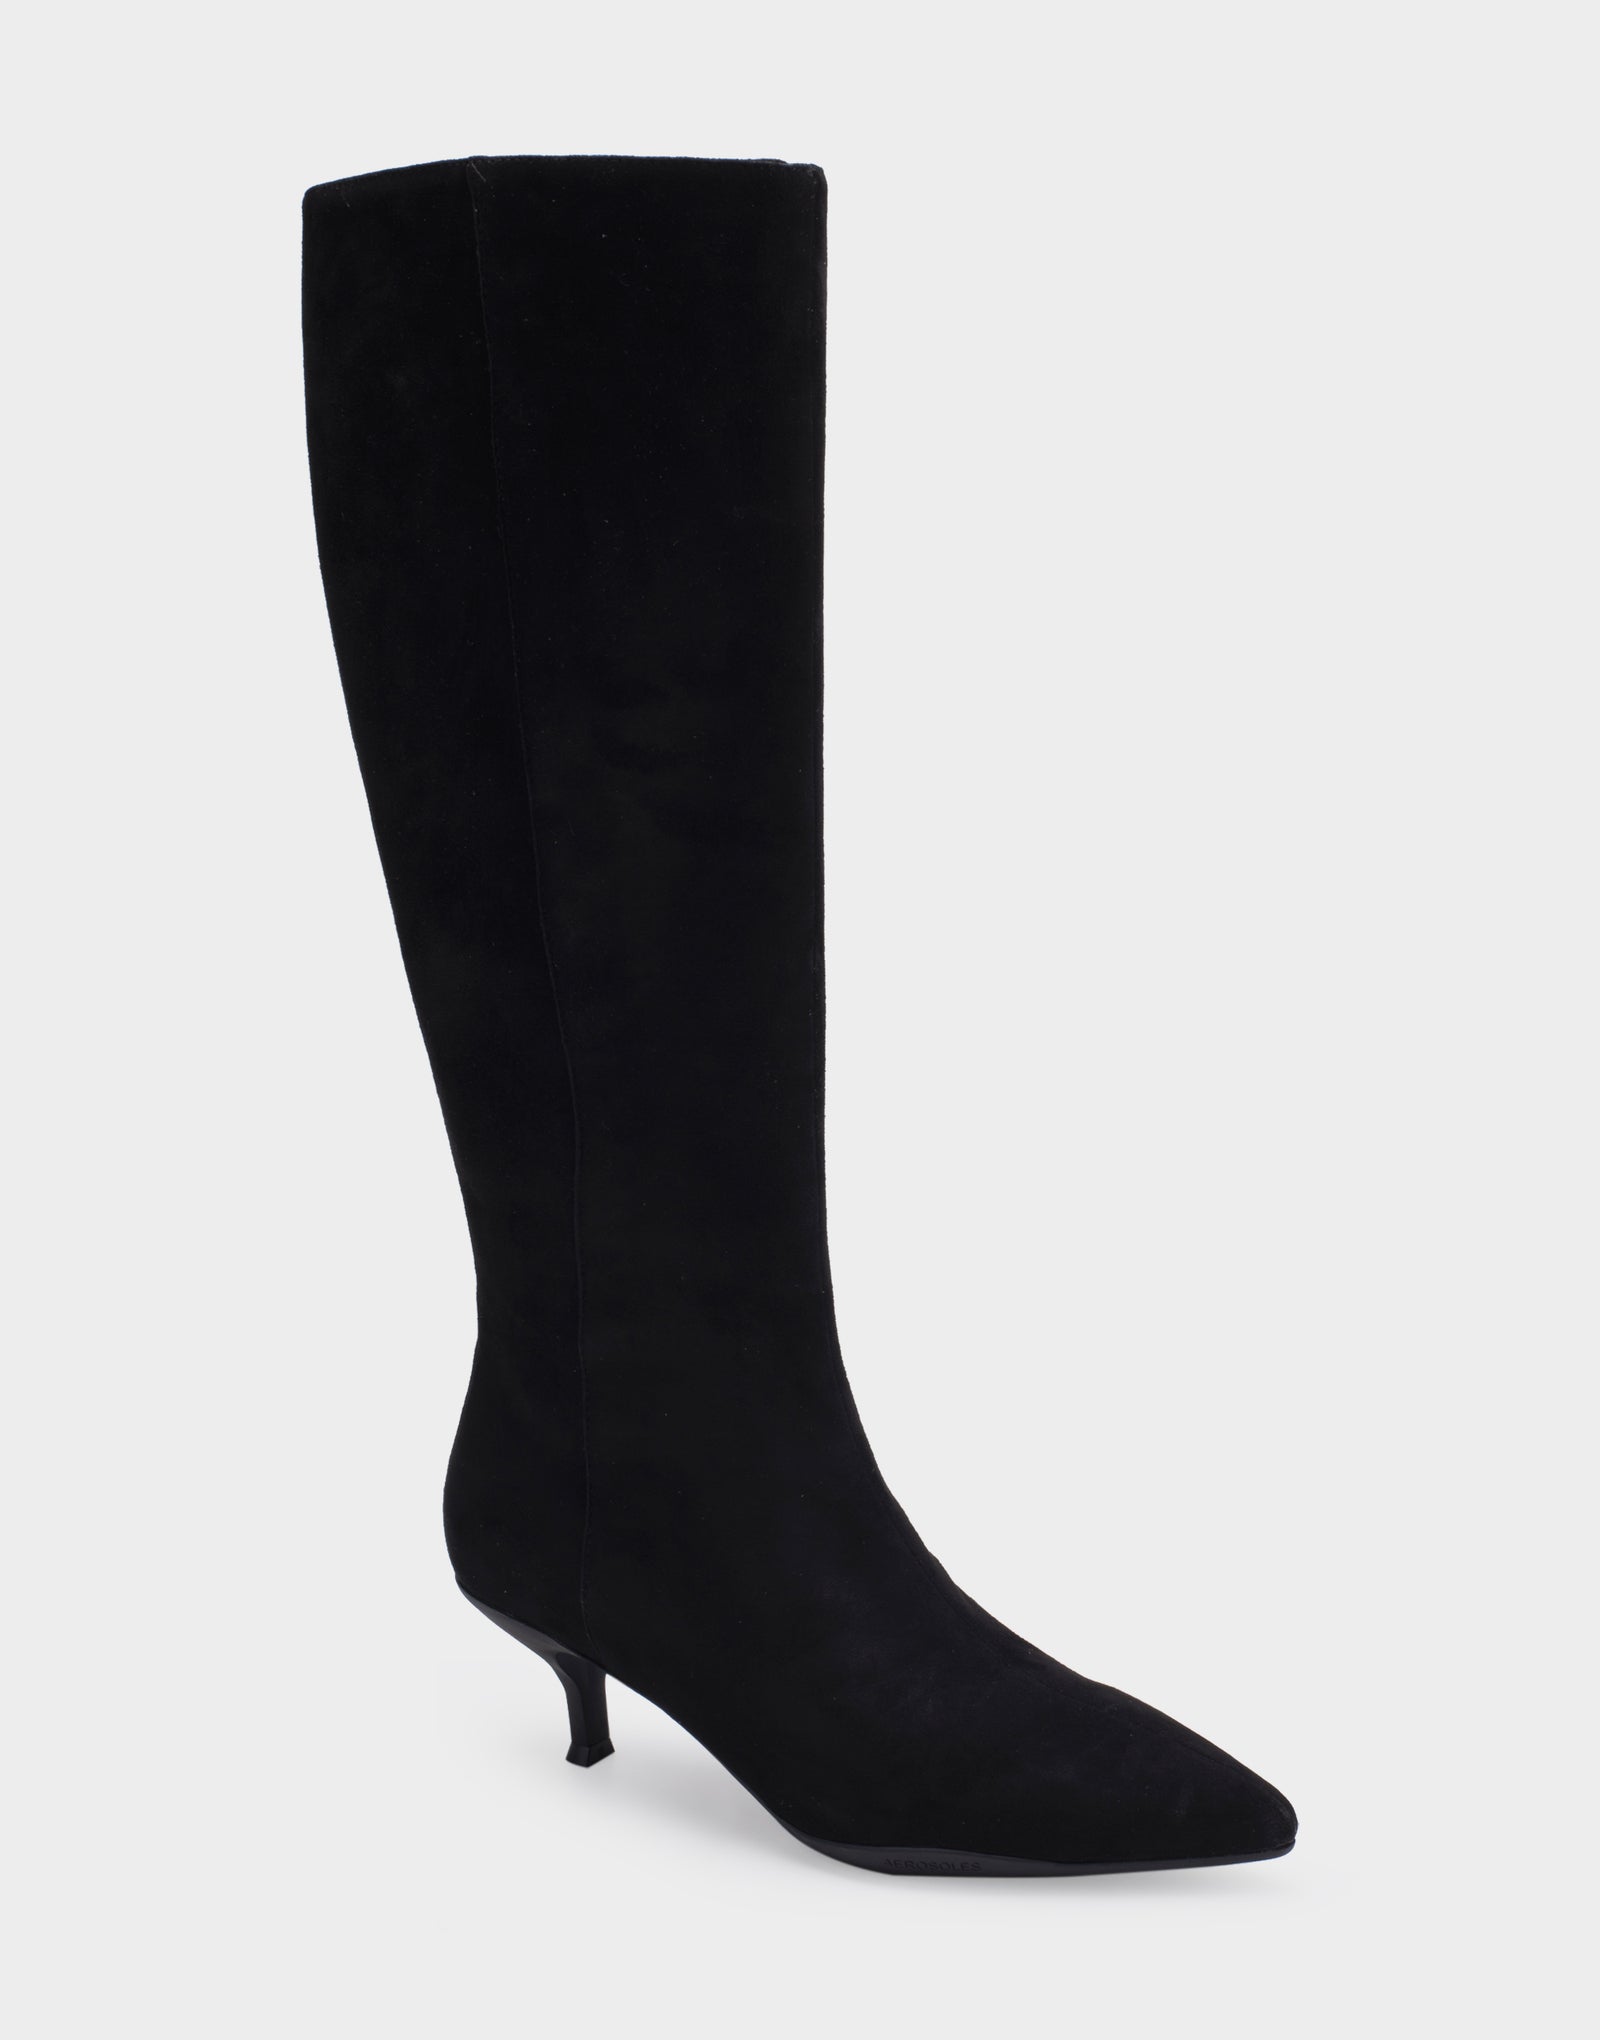 Women's Kitten Heel Tall Shaft Boot in Black